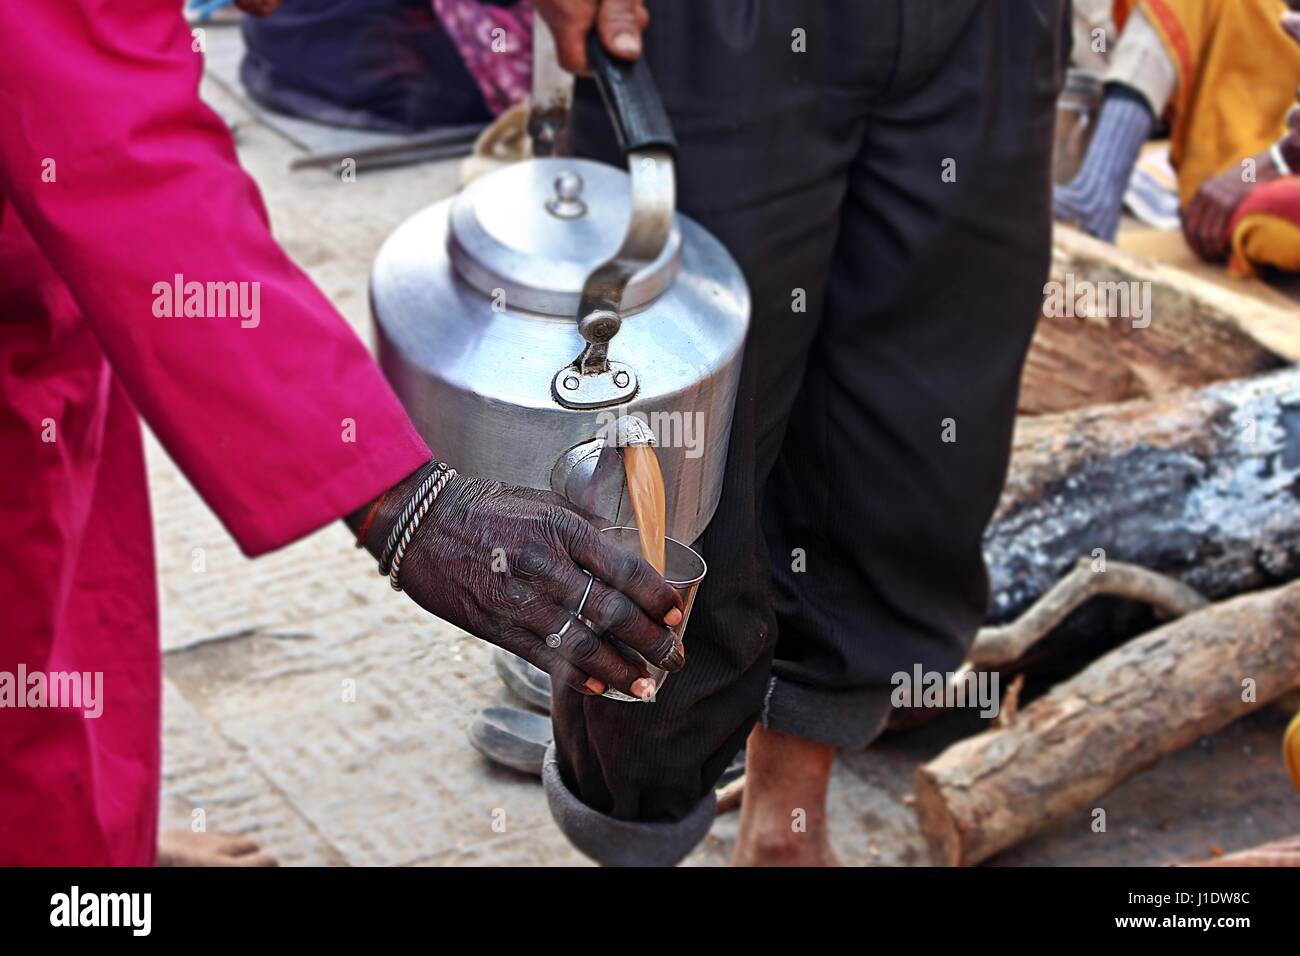 Sadhu Taking a Cup of Tea. Stock Photo